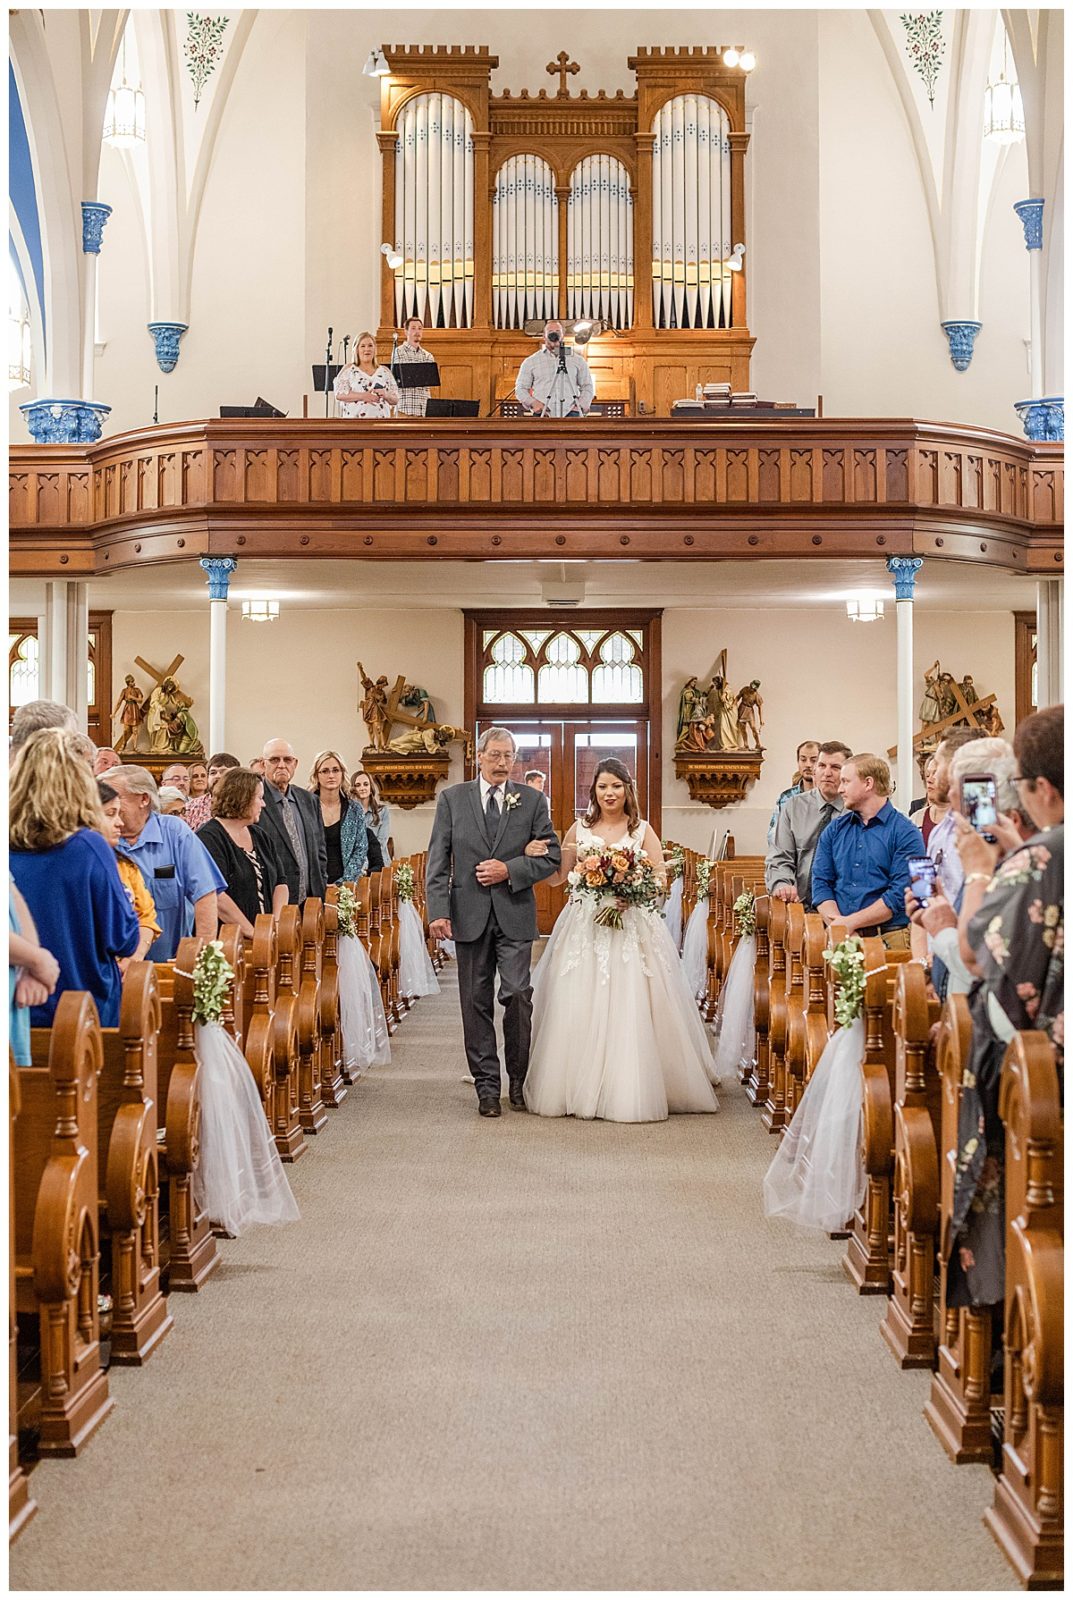 Catholic Wedding Ceremony | Des Moines Wedding shot by Jessica Brees Photo & Video